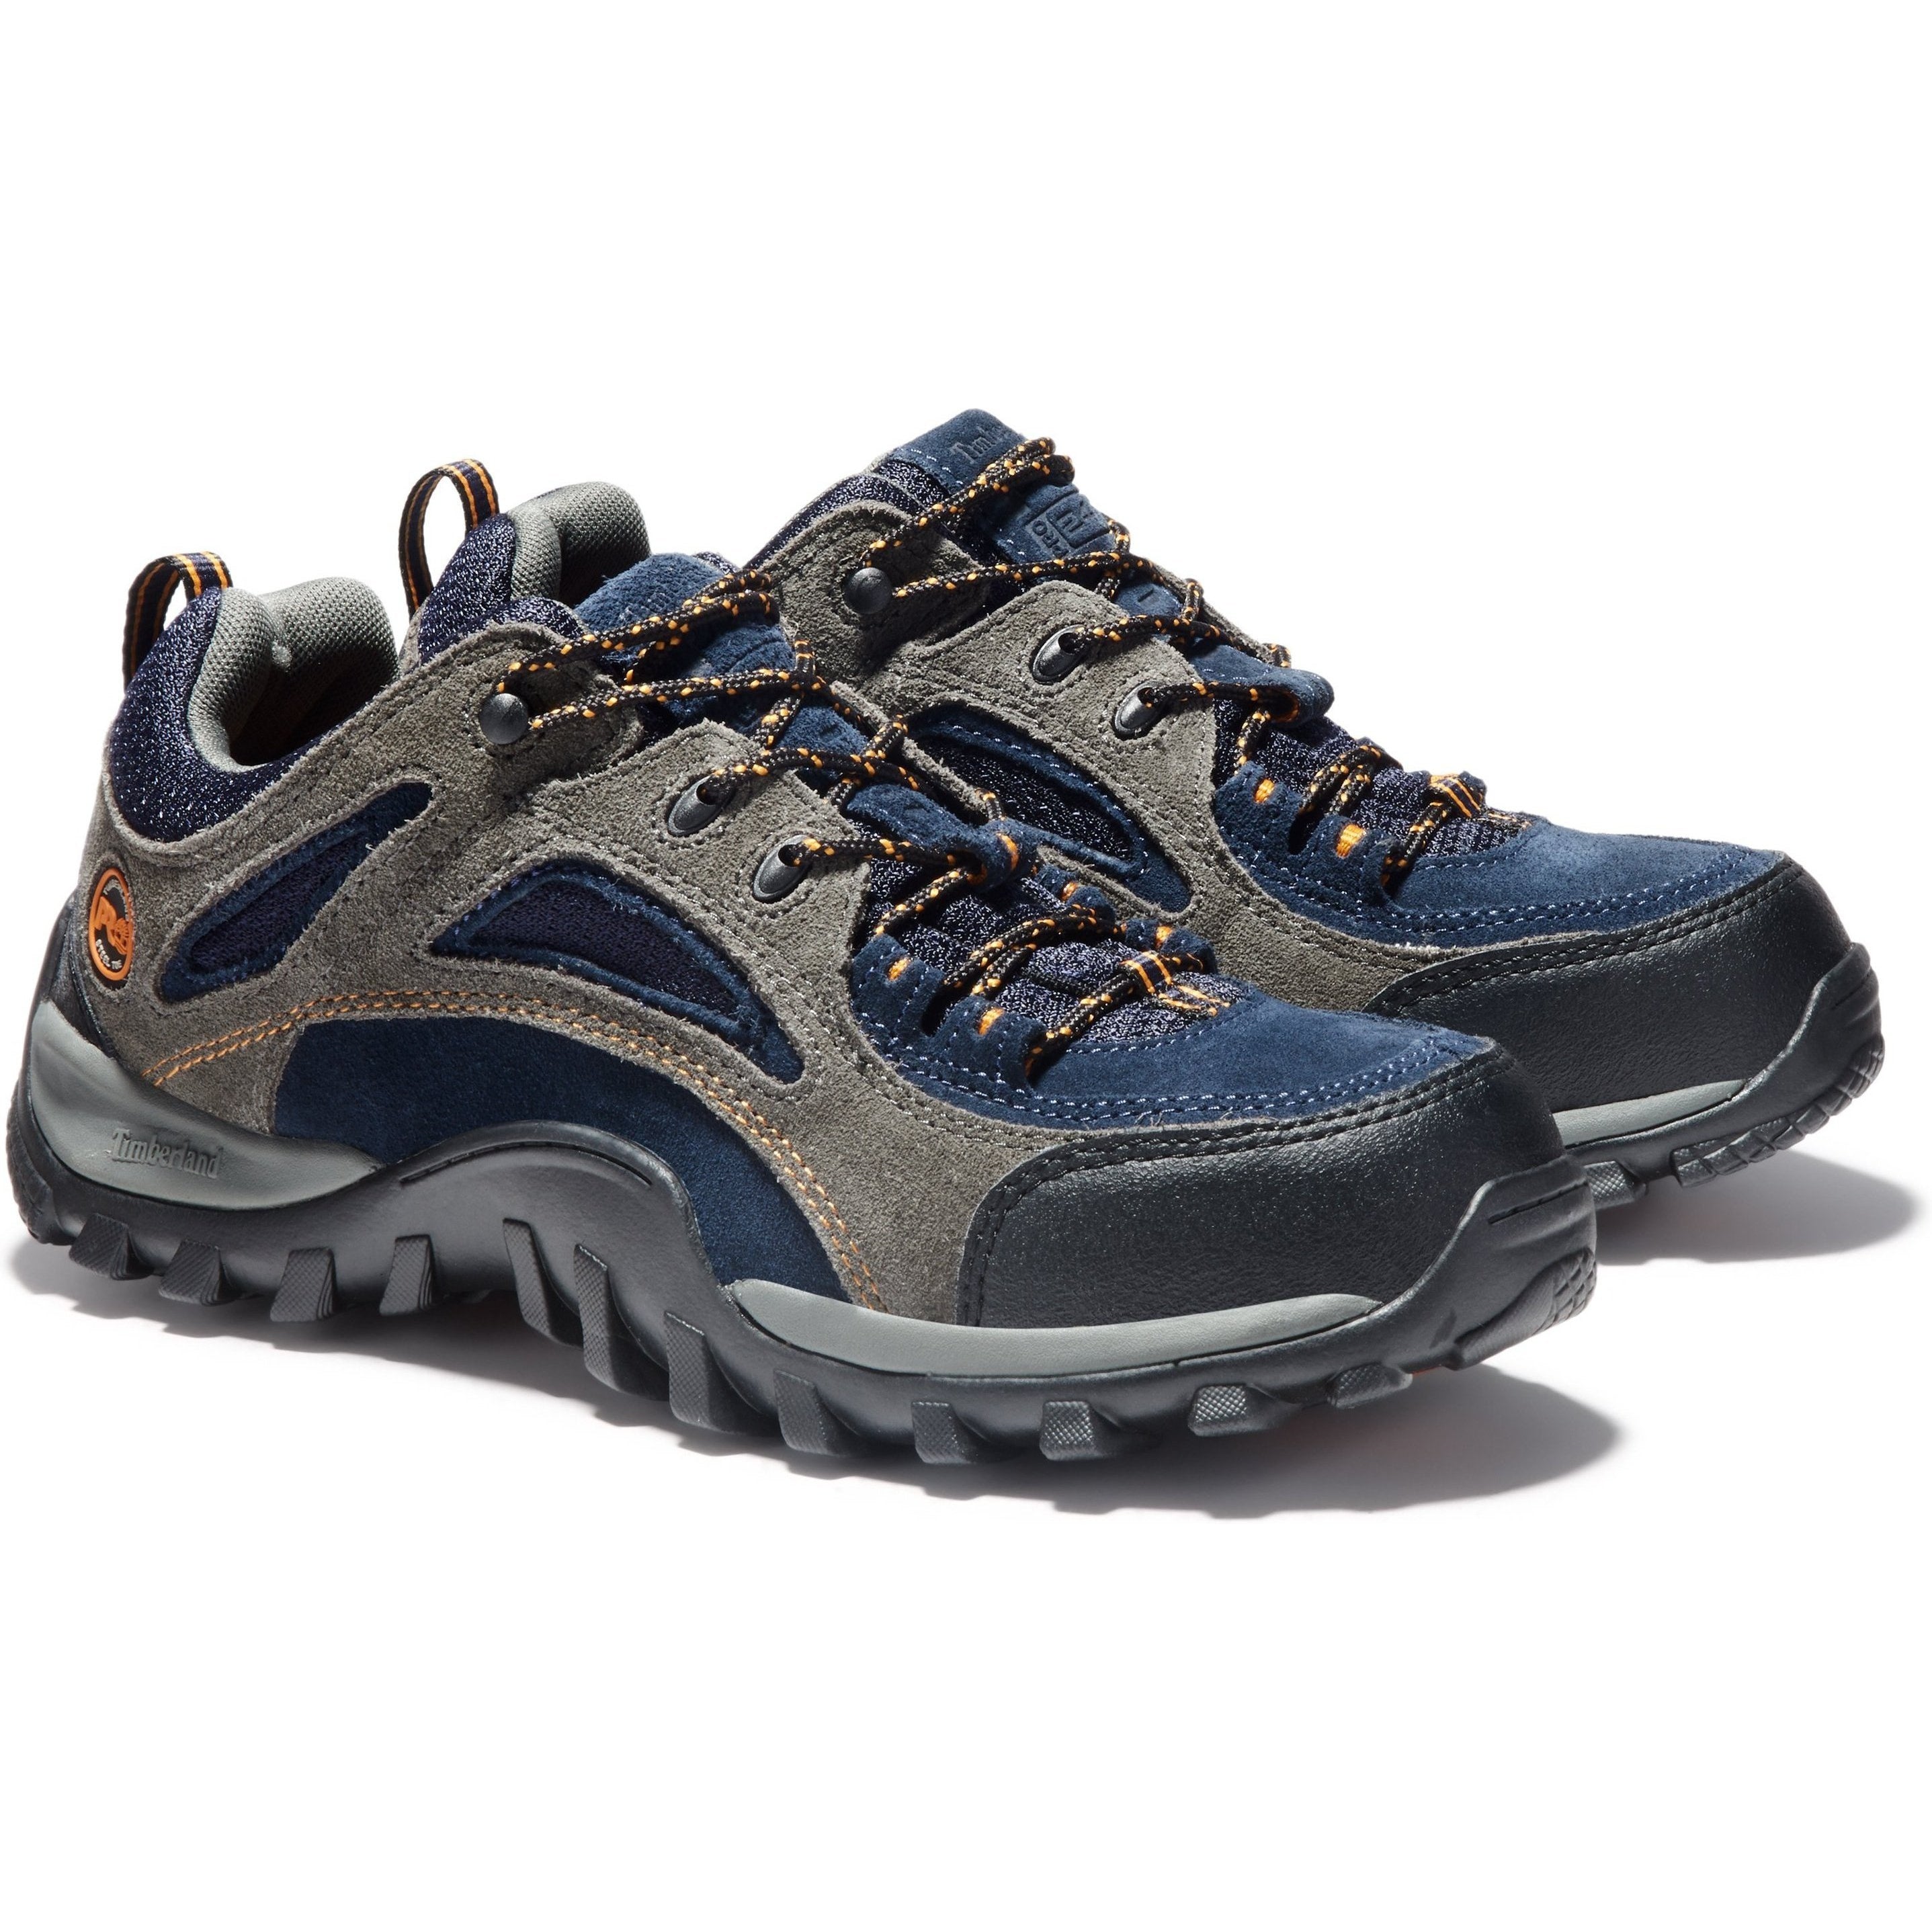 Timberland PRO Men's Mudsill Steel Toe Work Shoe - TB161009484 7 / Medium / Grey/Sapphire - Overlook Boots